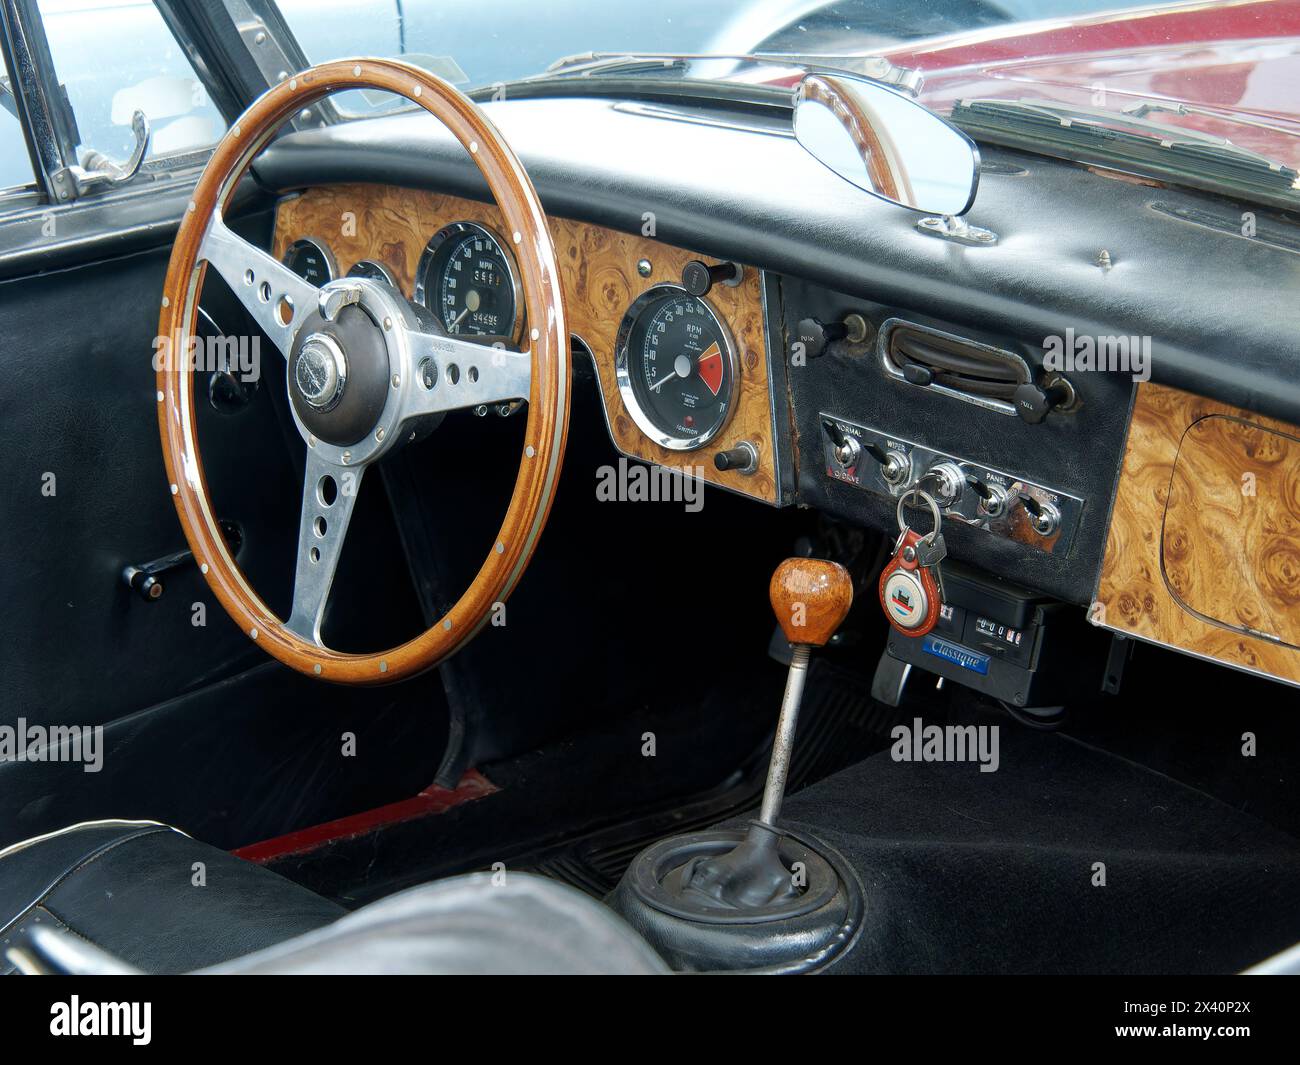 Austin Healey 3000 MK3 vintage car, Europe Stock Photo